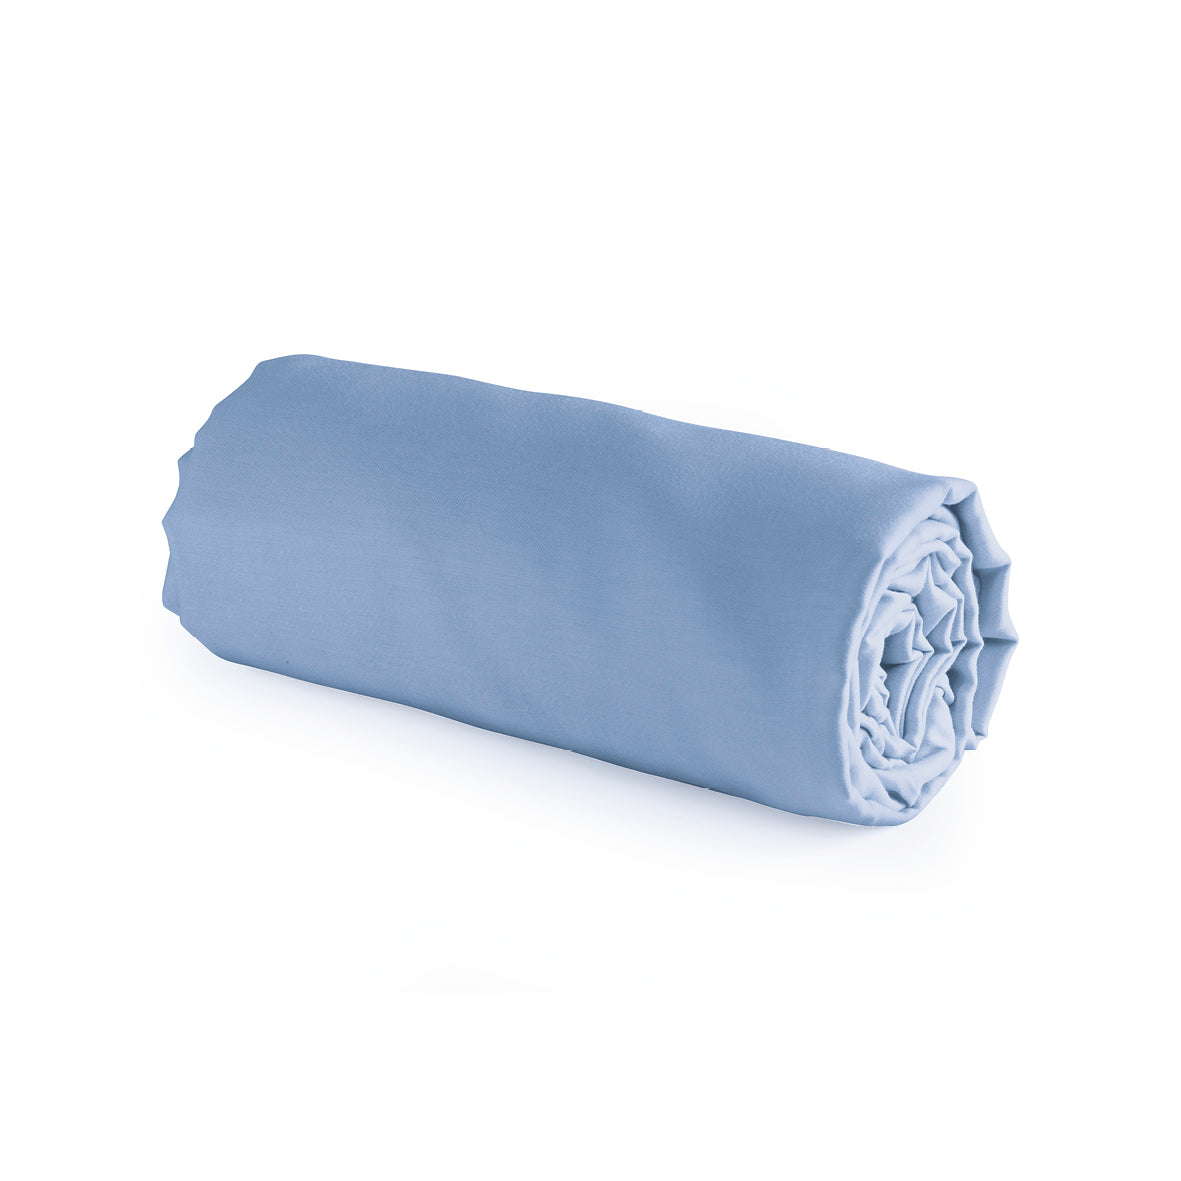 Fitted sheet - 100% cotton satin - Light blue